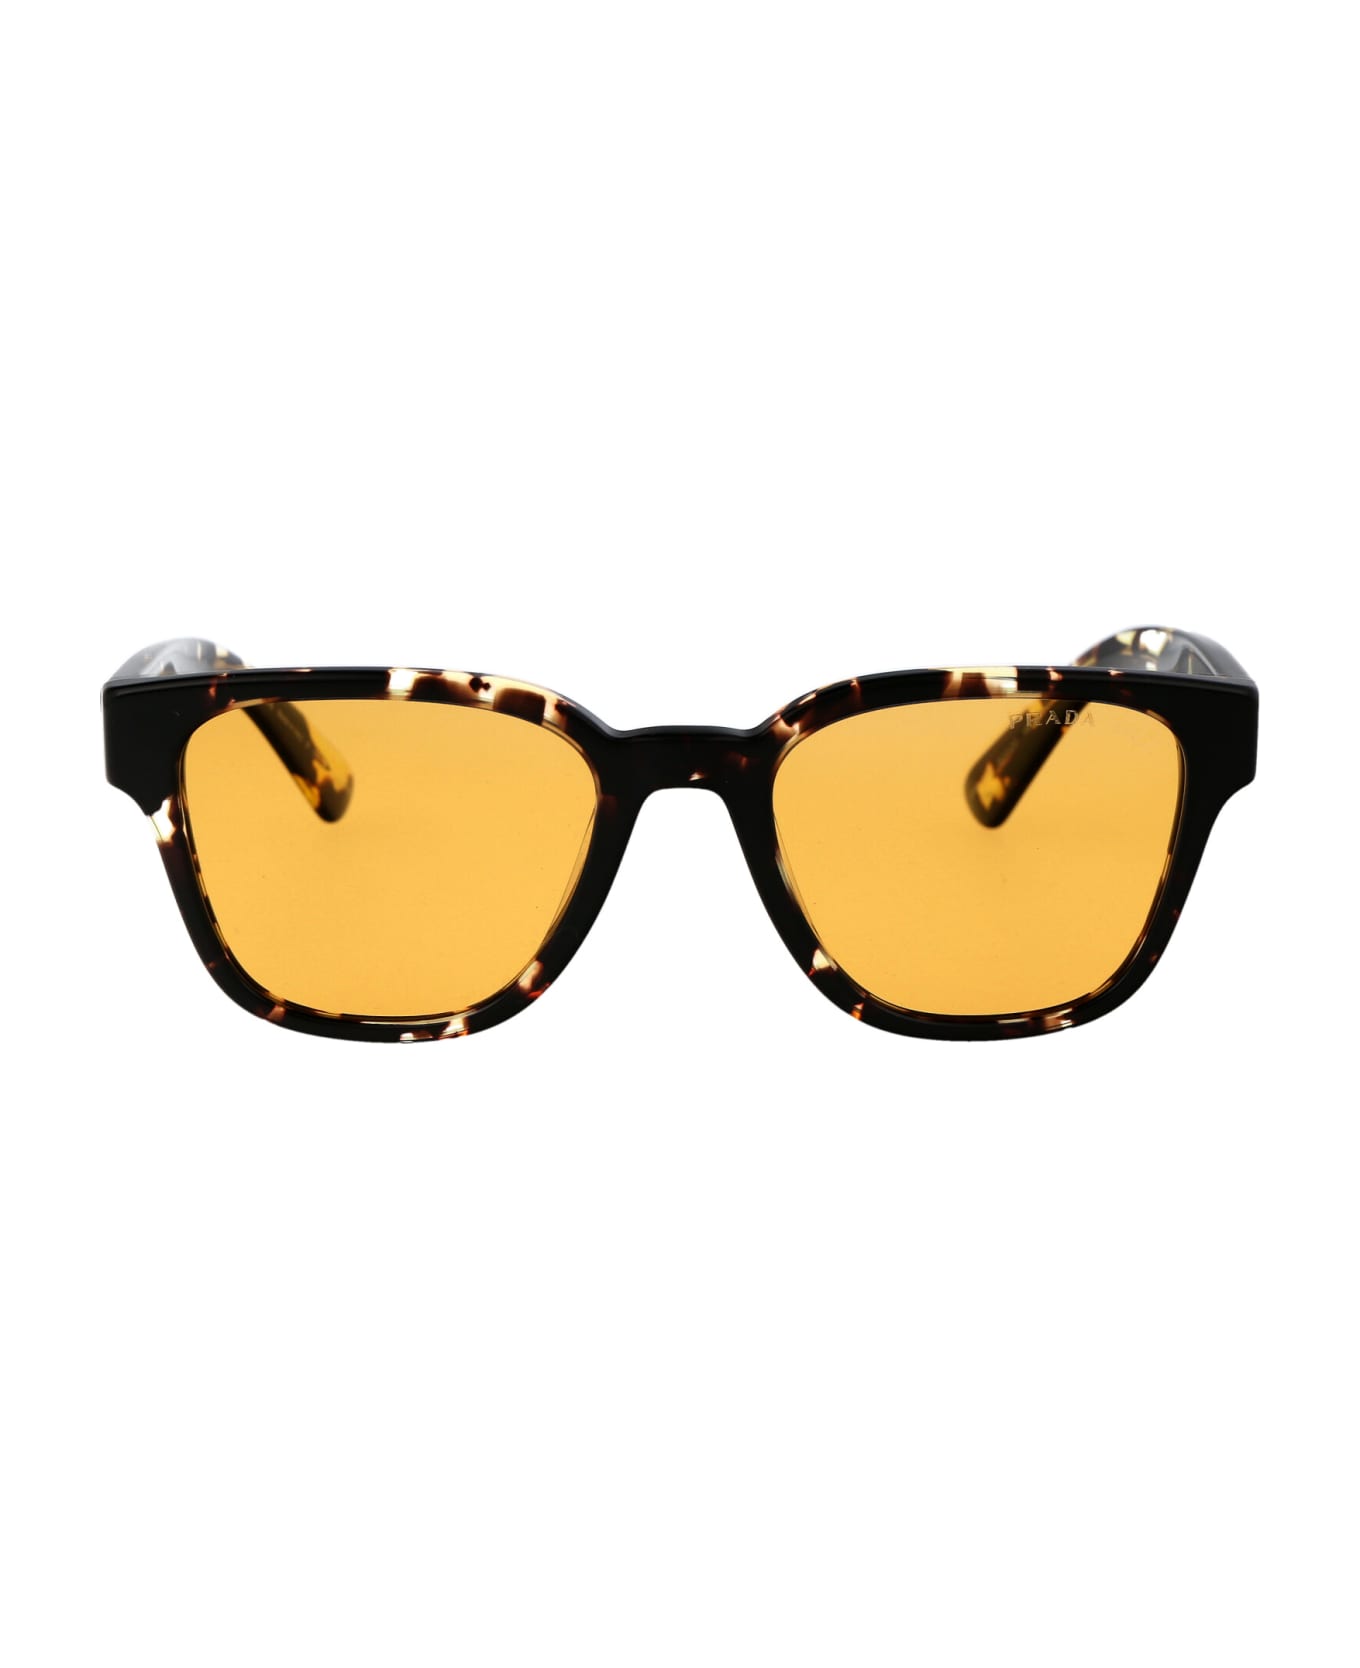 Prada Eyewear 0pr A04s Sunglasses - 16O20C Havana Black/Yellow サングラス